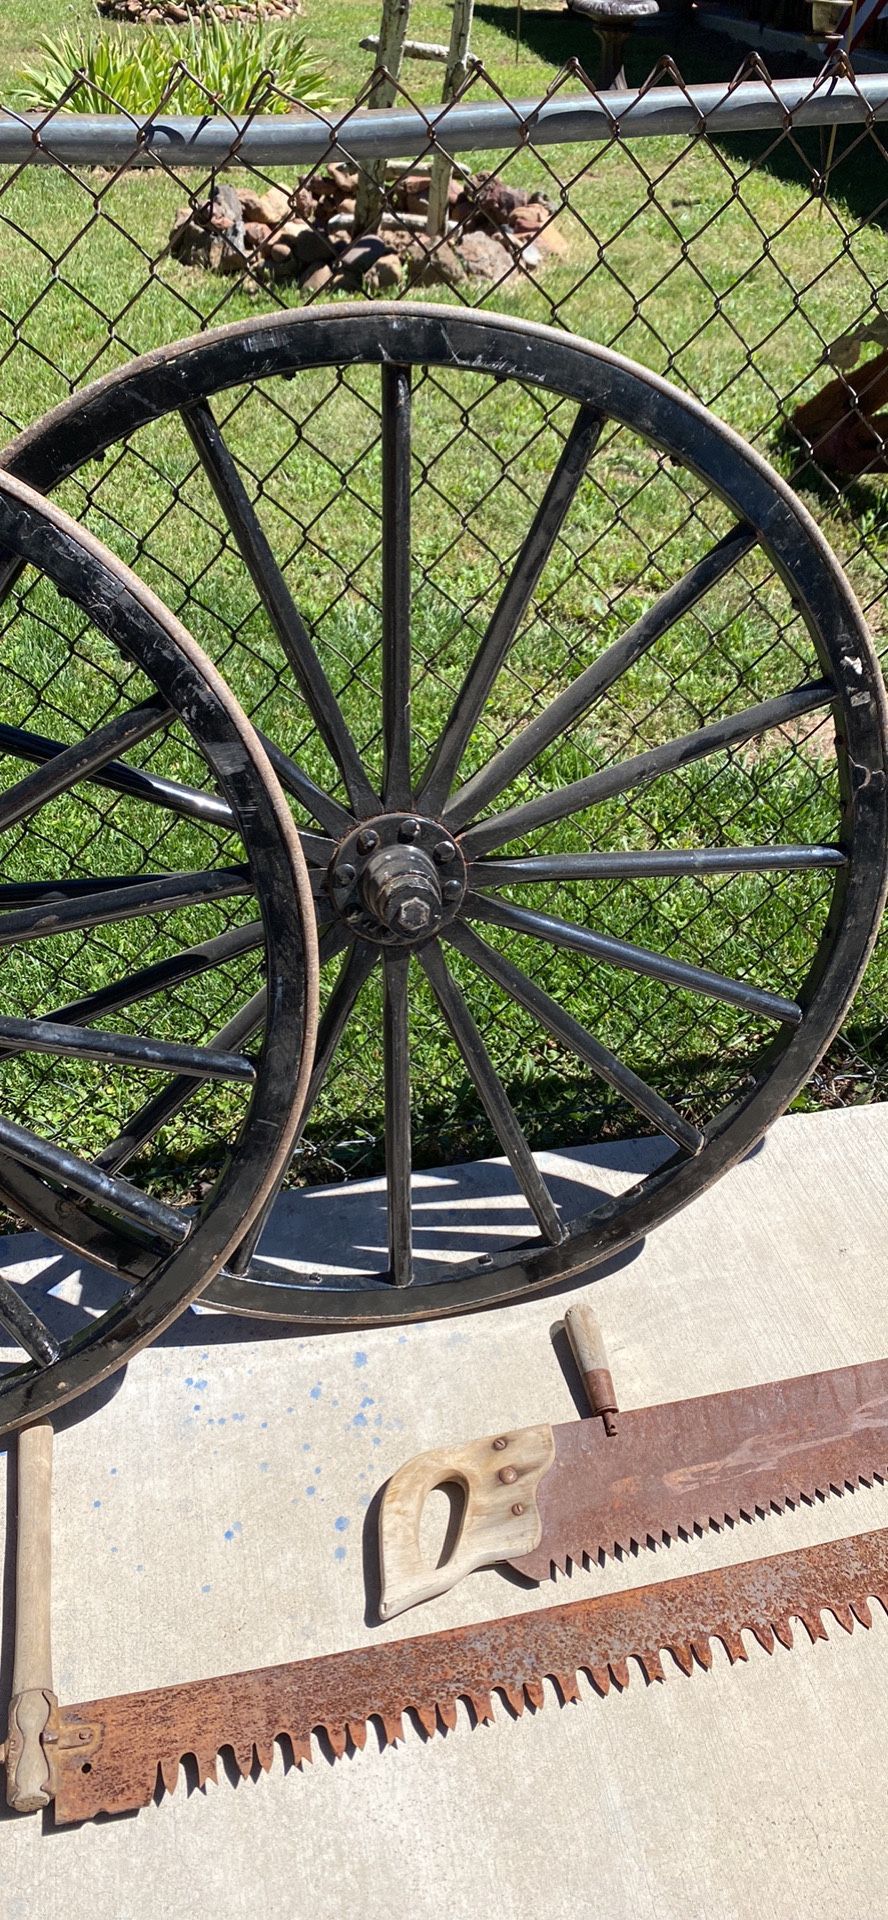 Amish wagon wheels